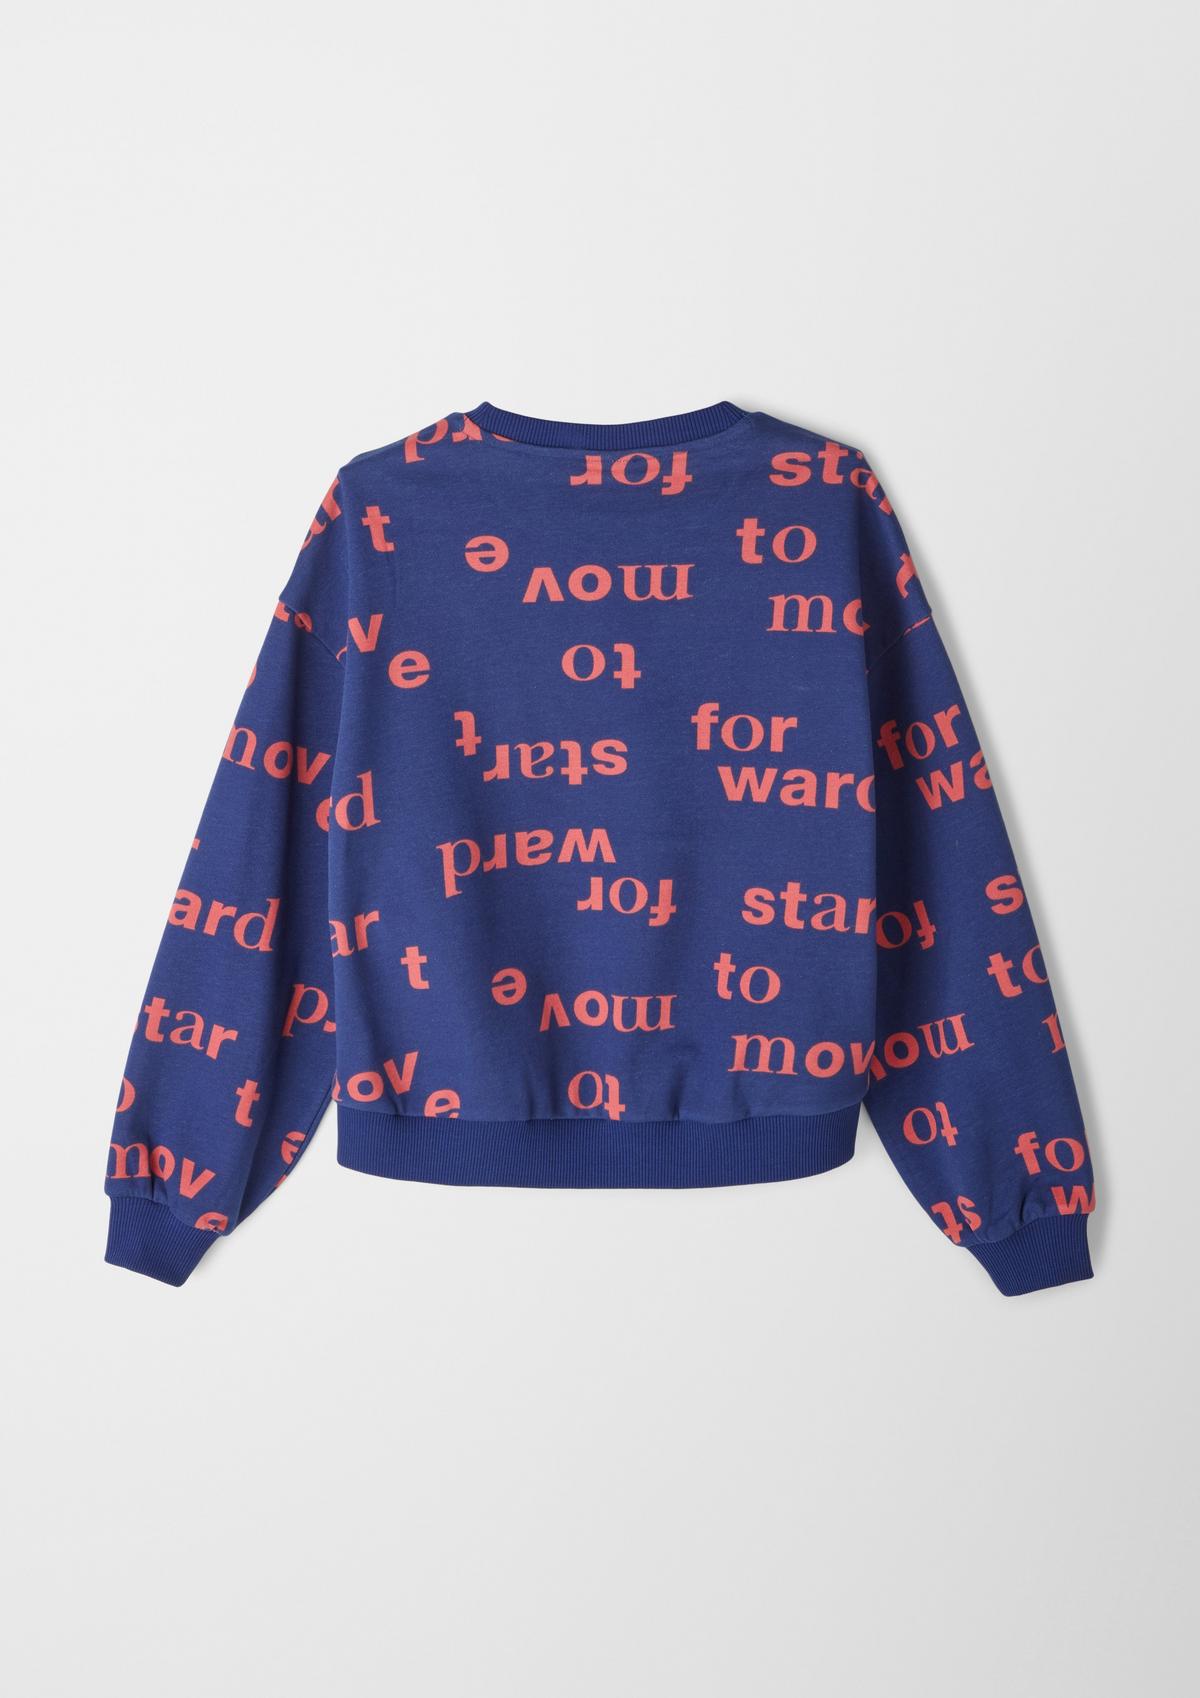 s.Oliver Sweatshirt pulover z vzorcem po vsem oblačilu